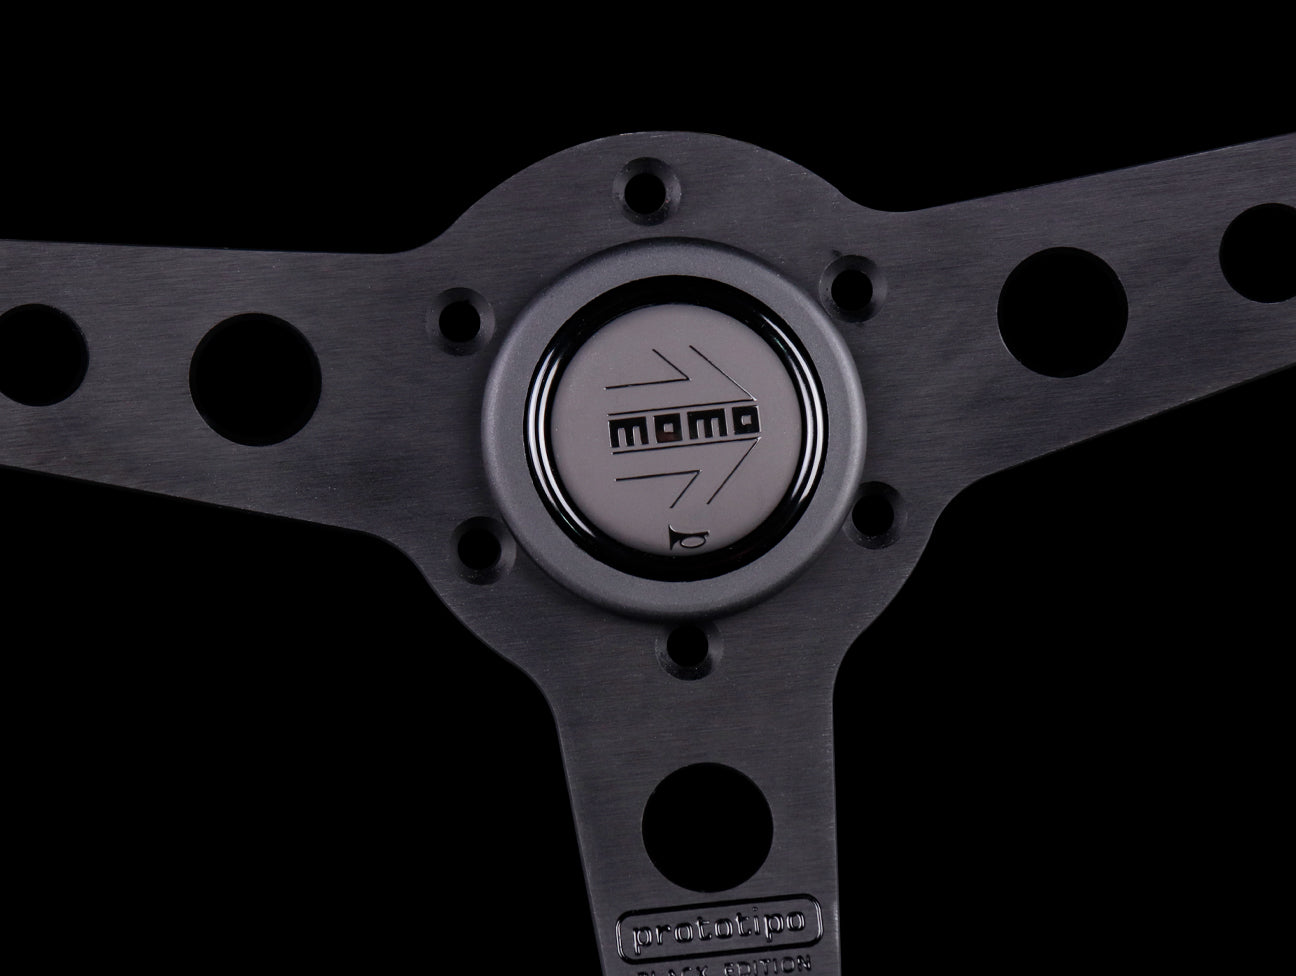 Momo 350mm Prototipo Steering Wheel - Black Edition